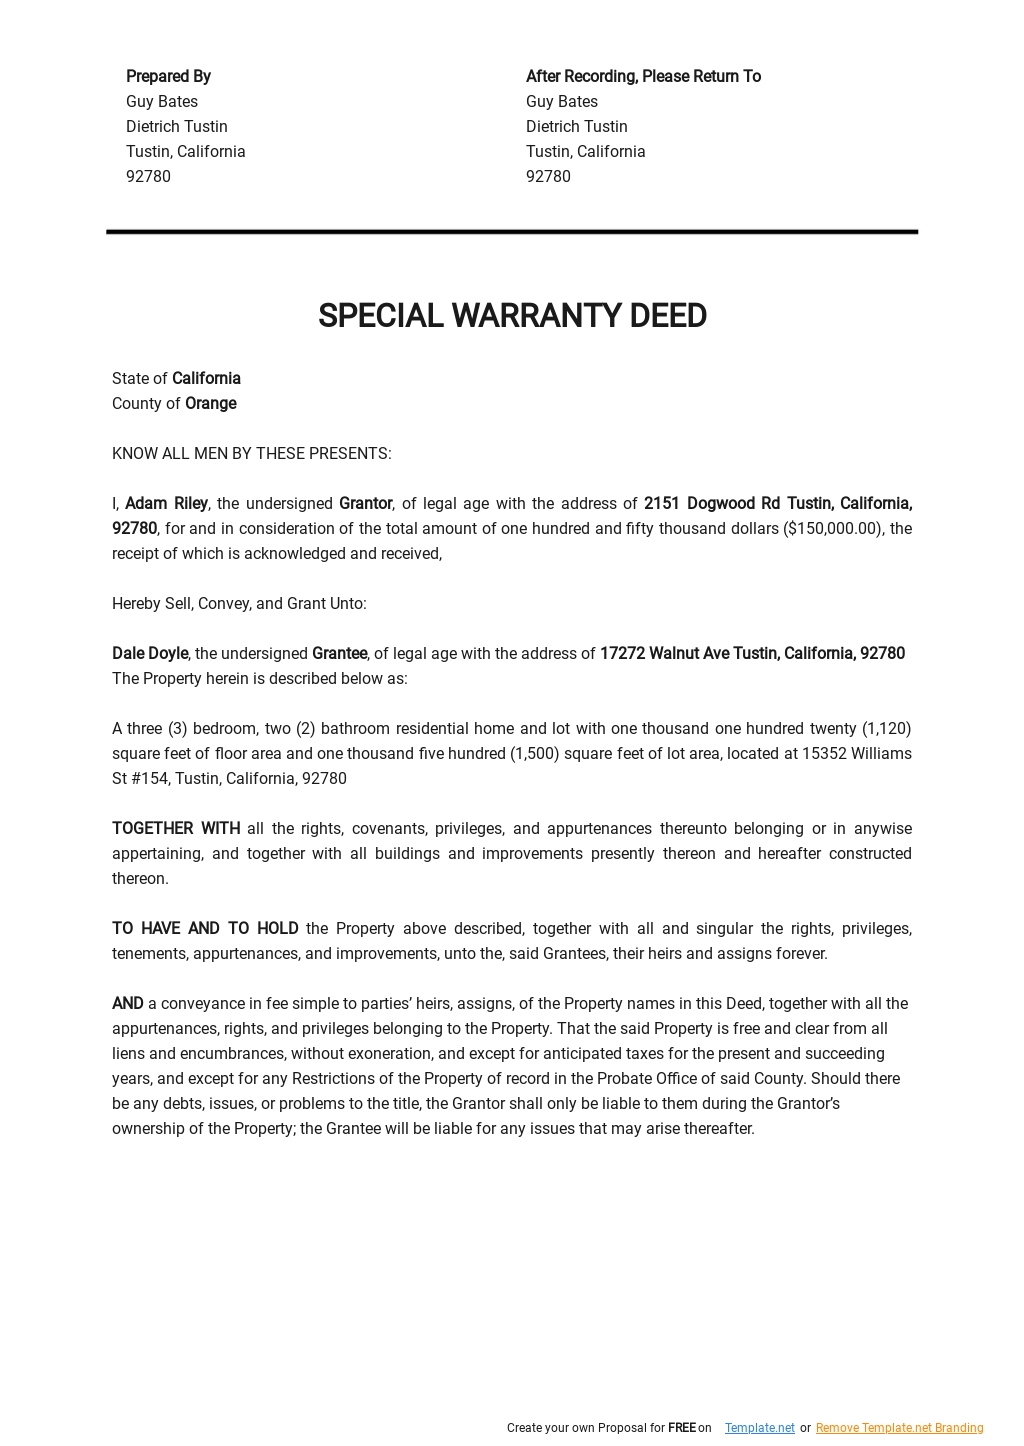 Special Warranty Deed Template 